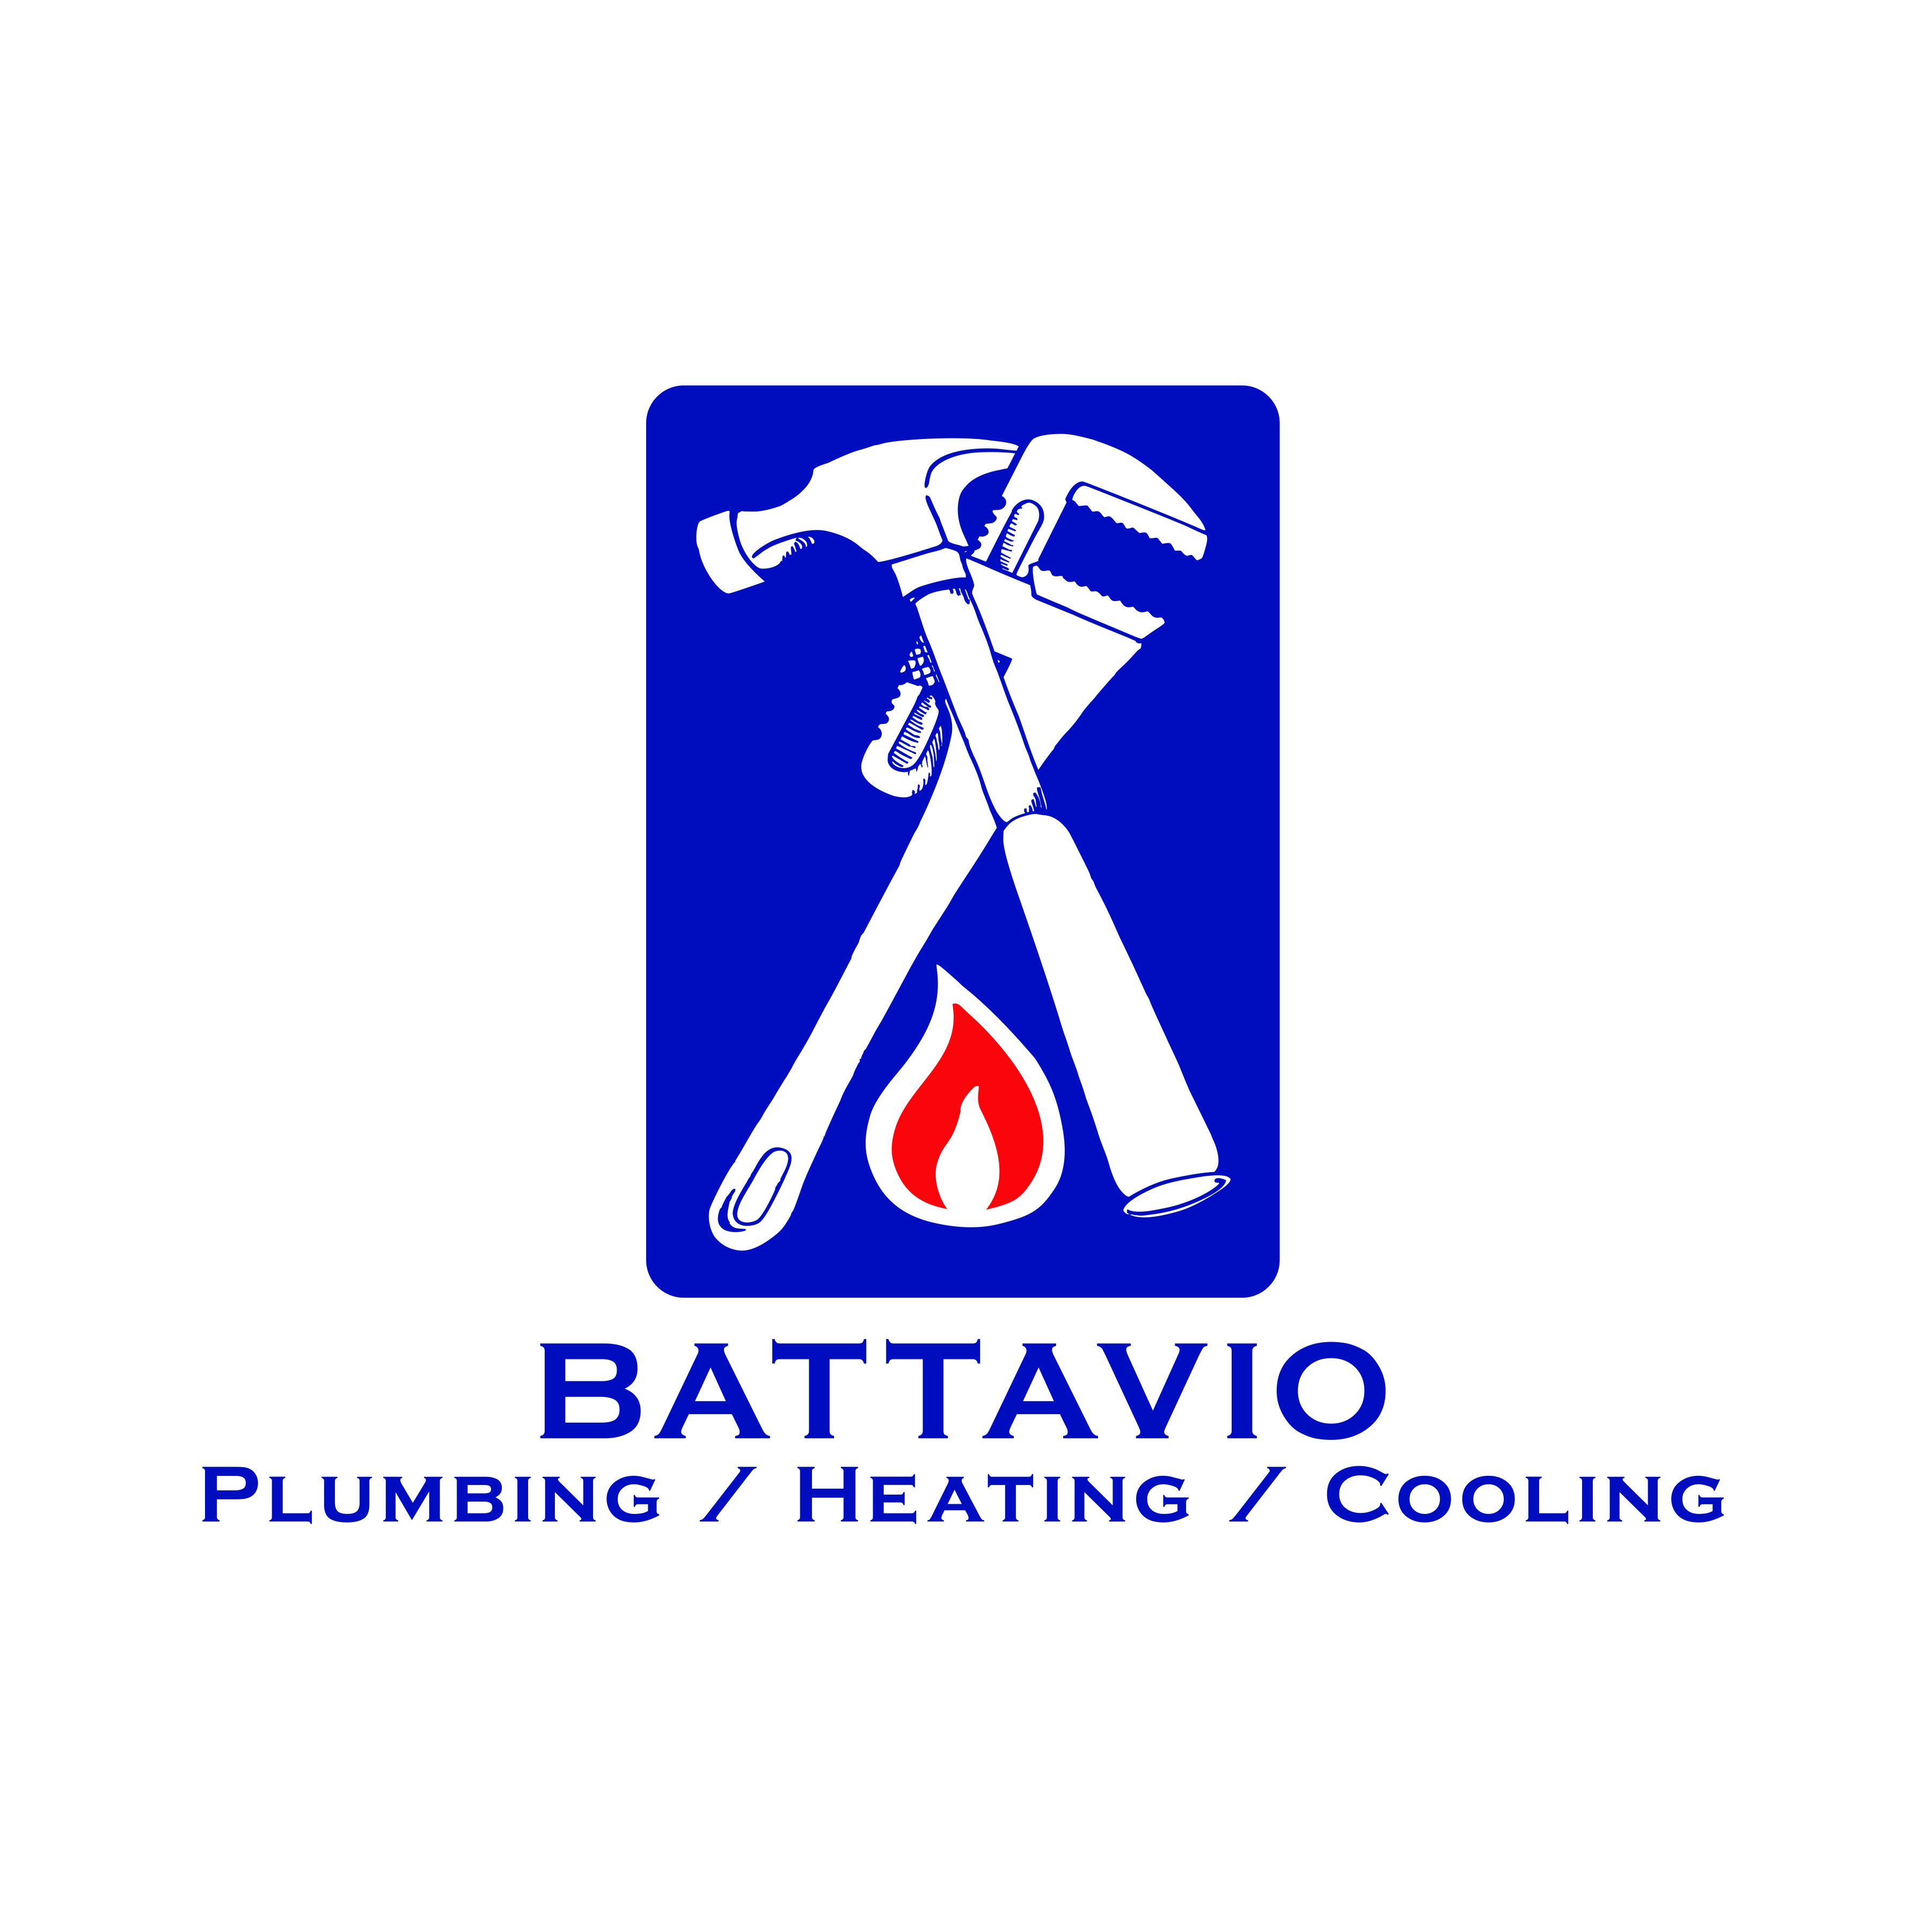 Battavio Plumbing, Heating and Cooling